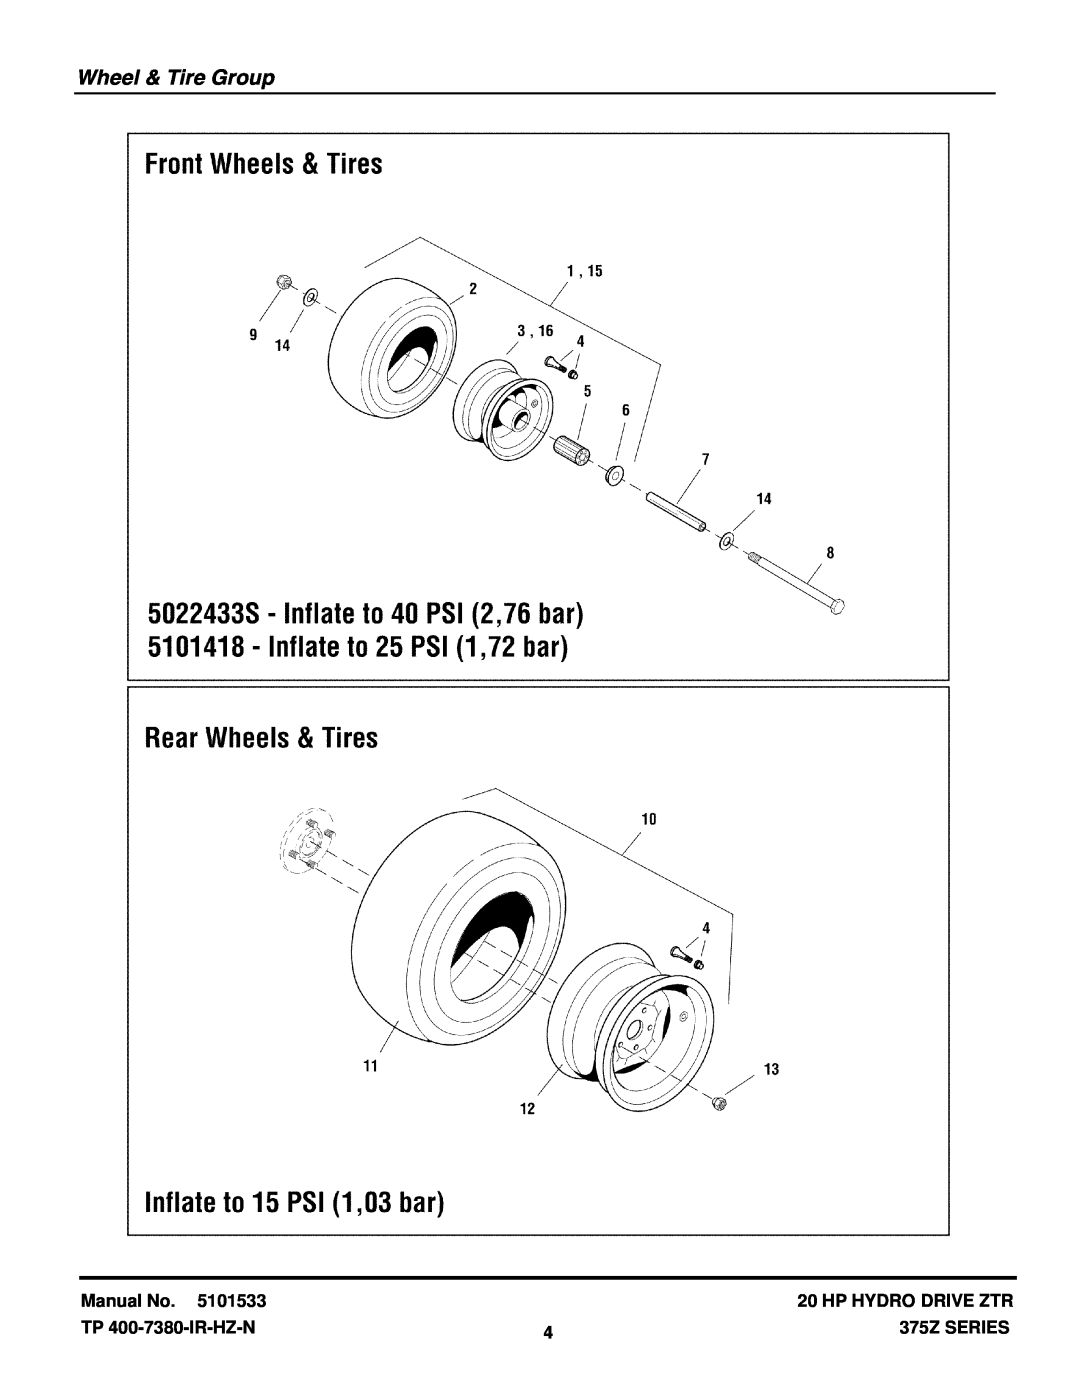 Snapper manual Wheel & Tire Group, Manual No, Hp Hydro Drive Ztr, TP 400-7380-IR-HZ-N, 375Z SERIES 